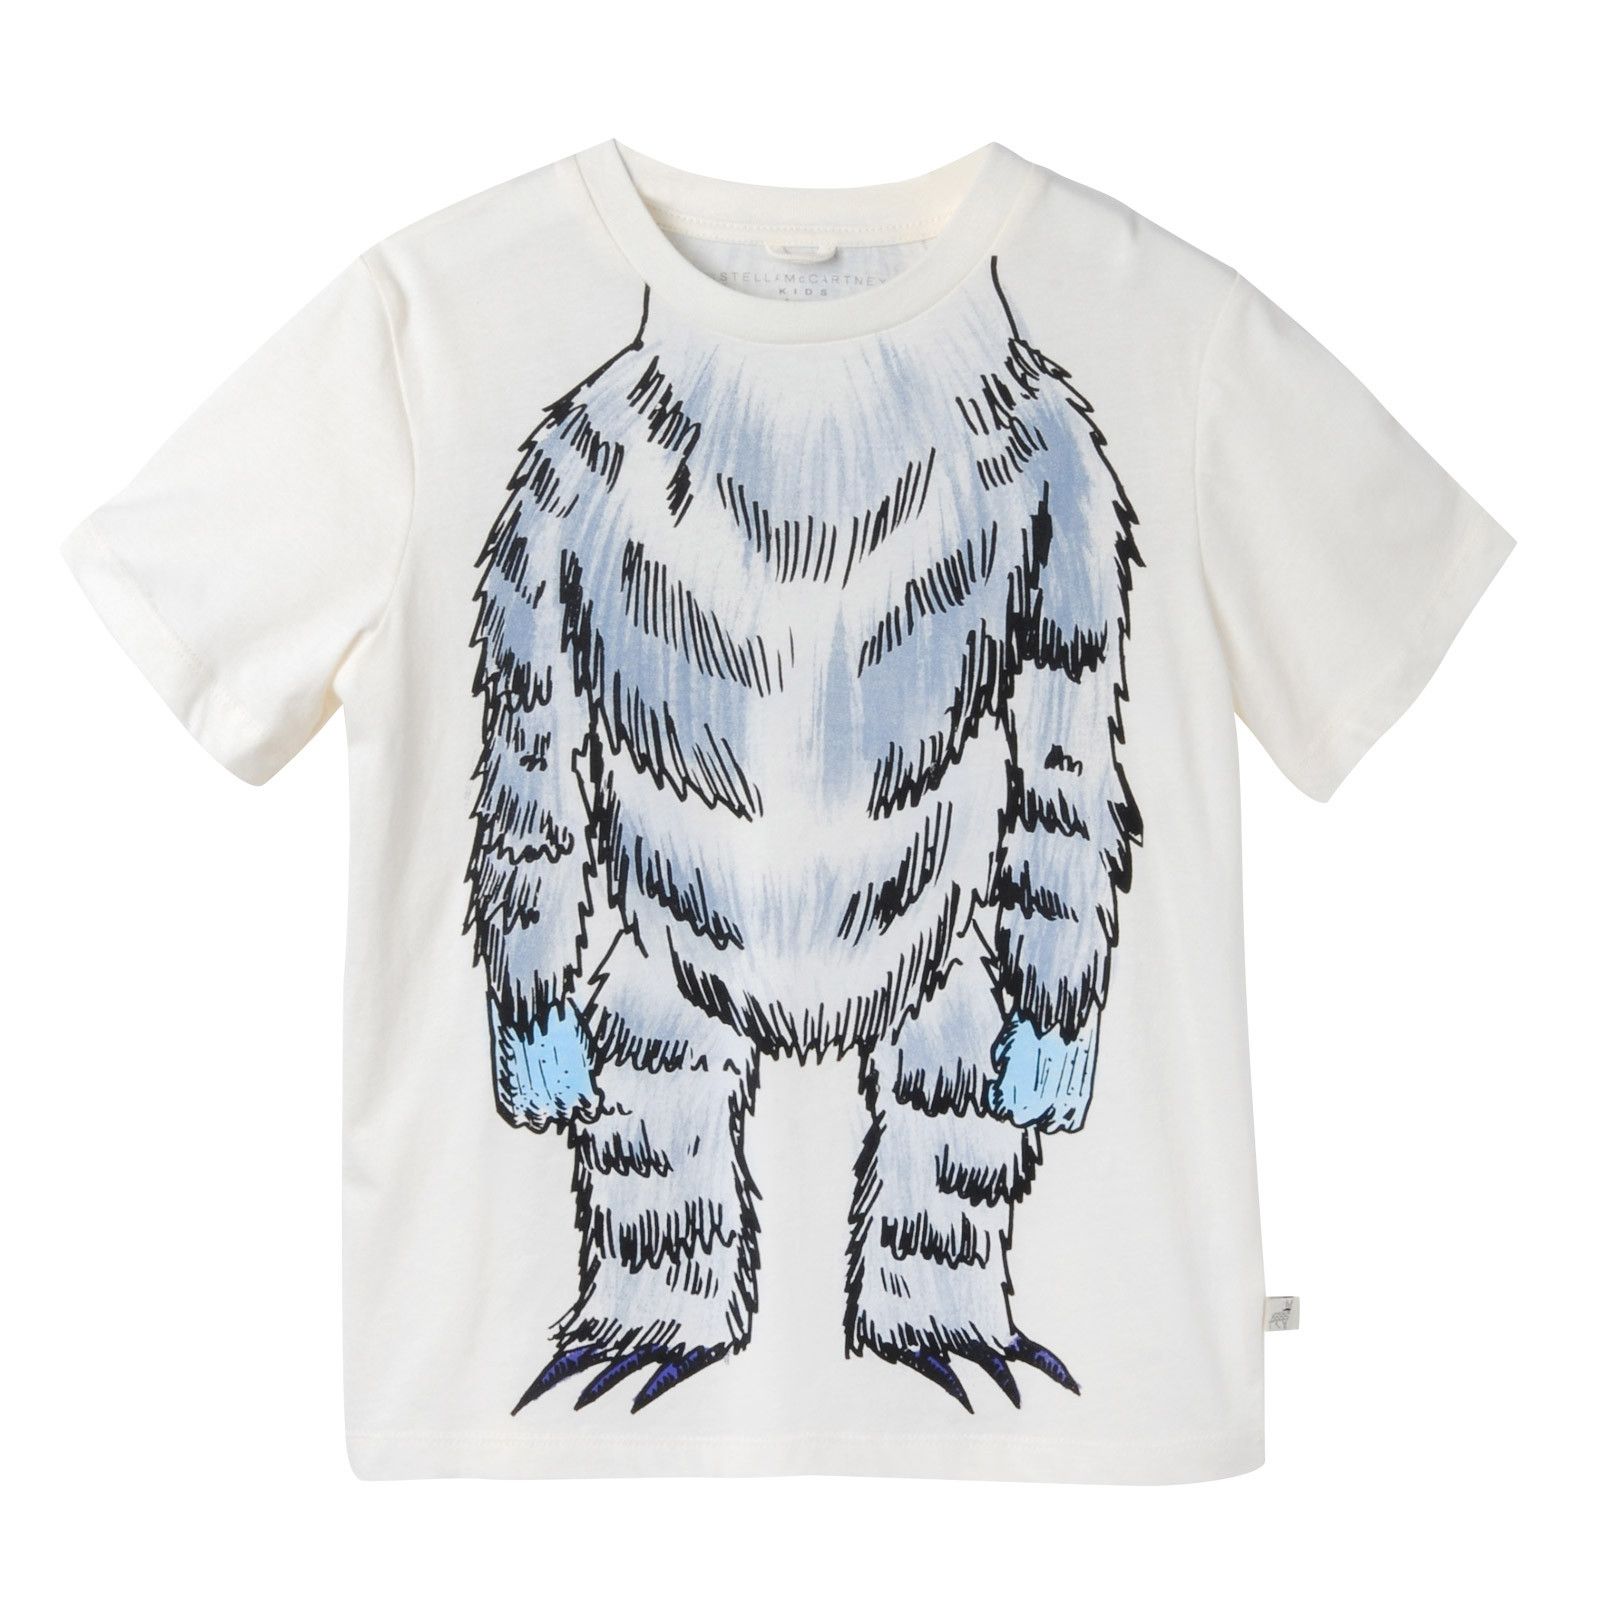 Boys White Cotton T-Shirt With Orangutan Print - CÉMAROSE | Children's Fashion Store - 1